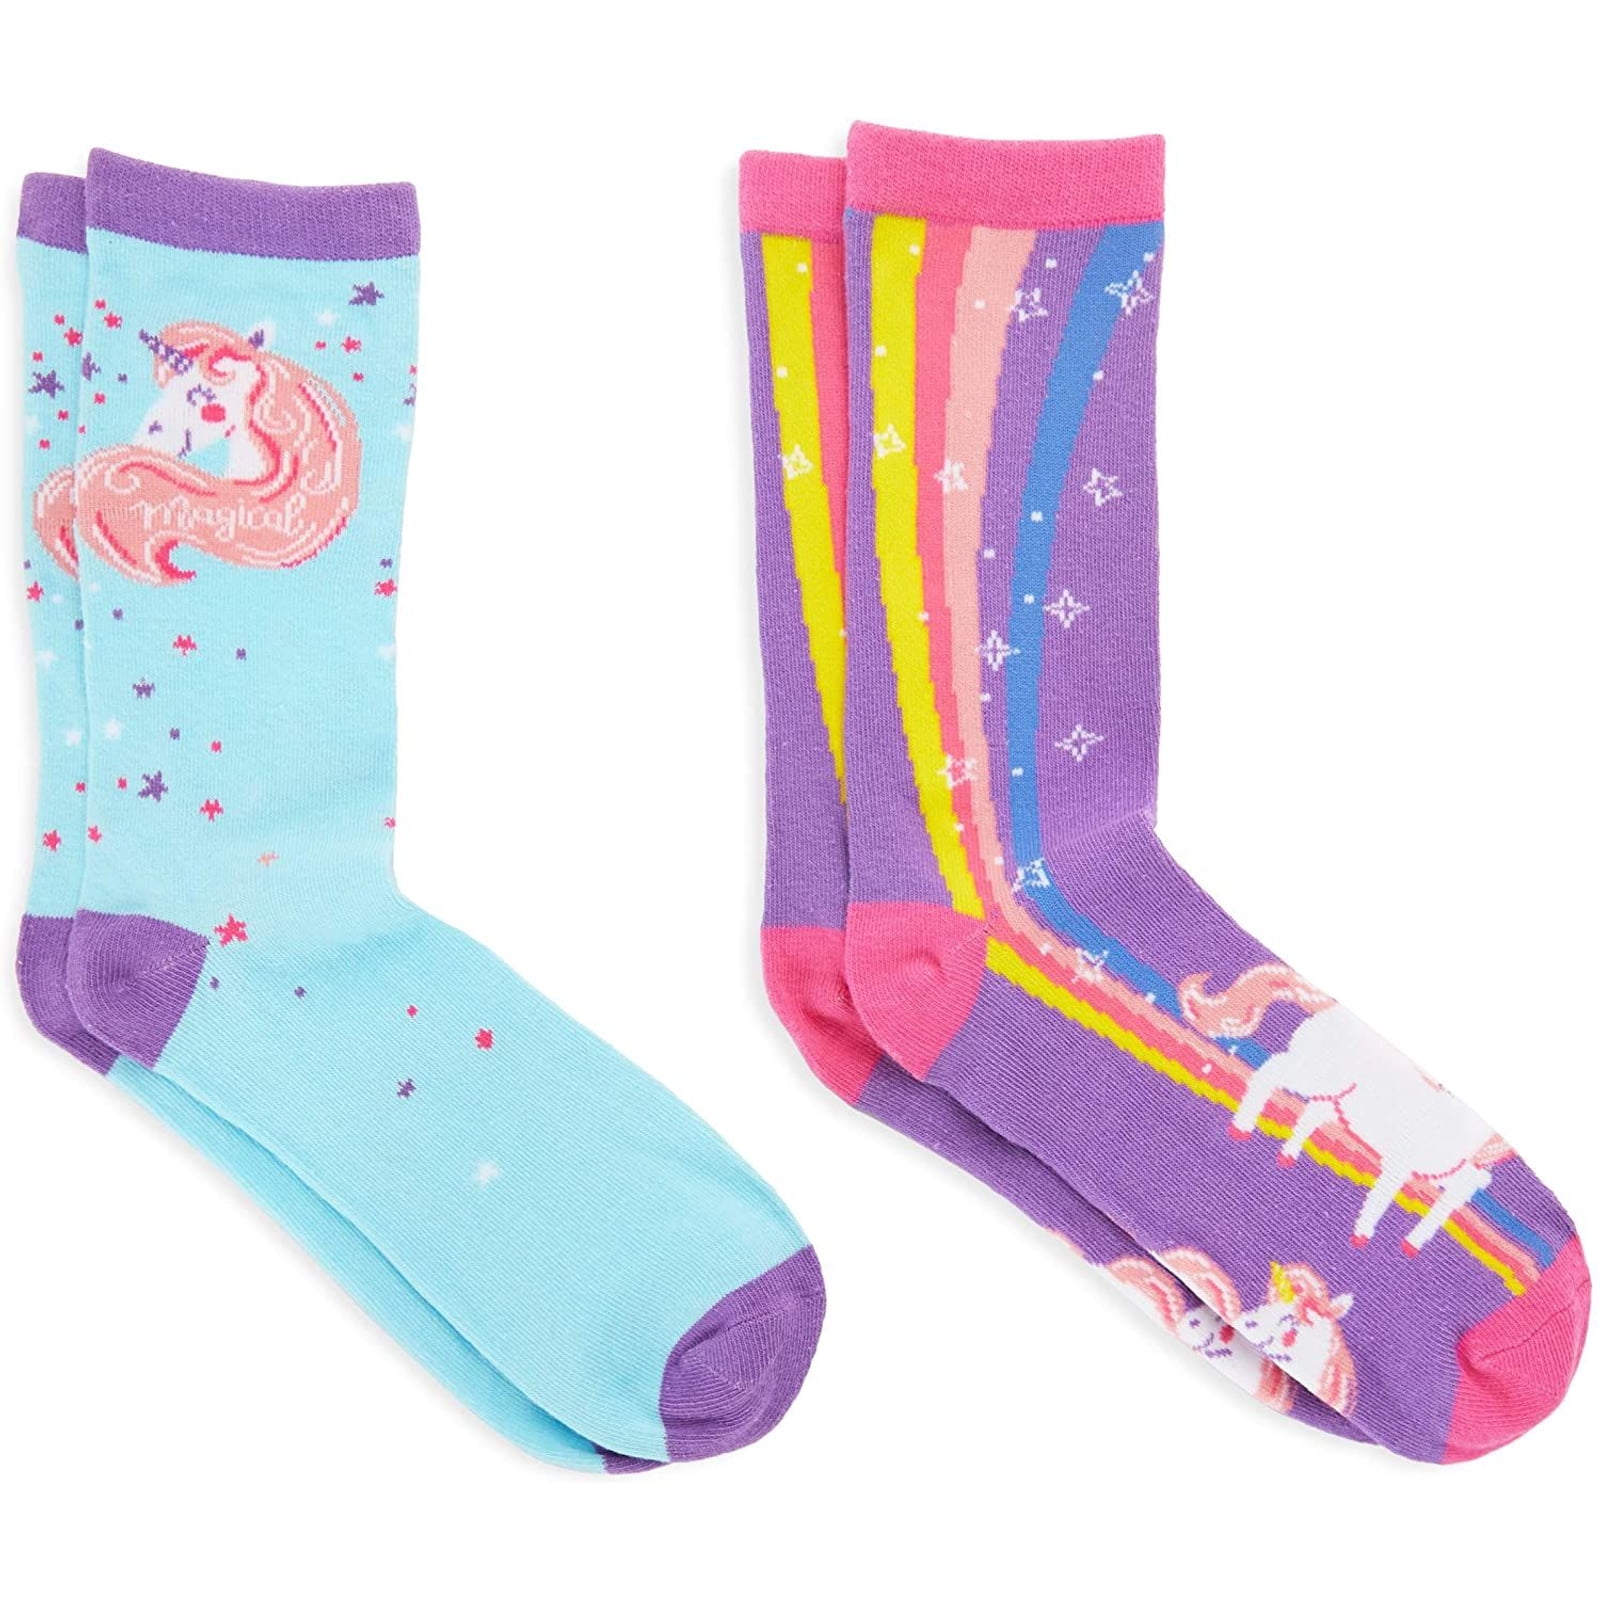 Unicorn pink rainbow cotton crew  socks for women lady gift